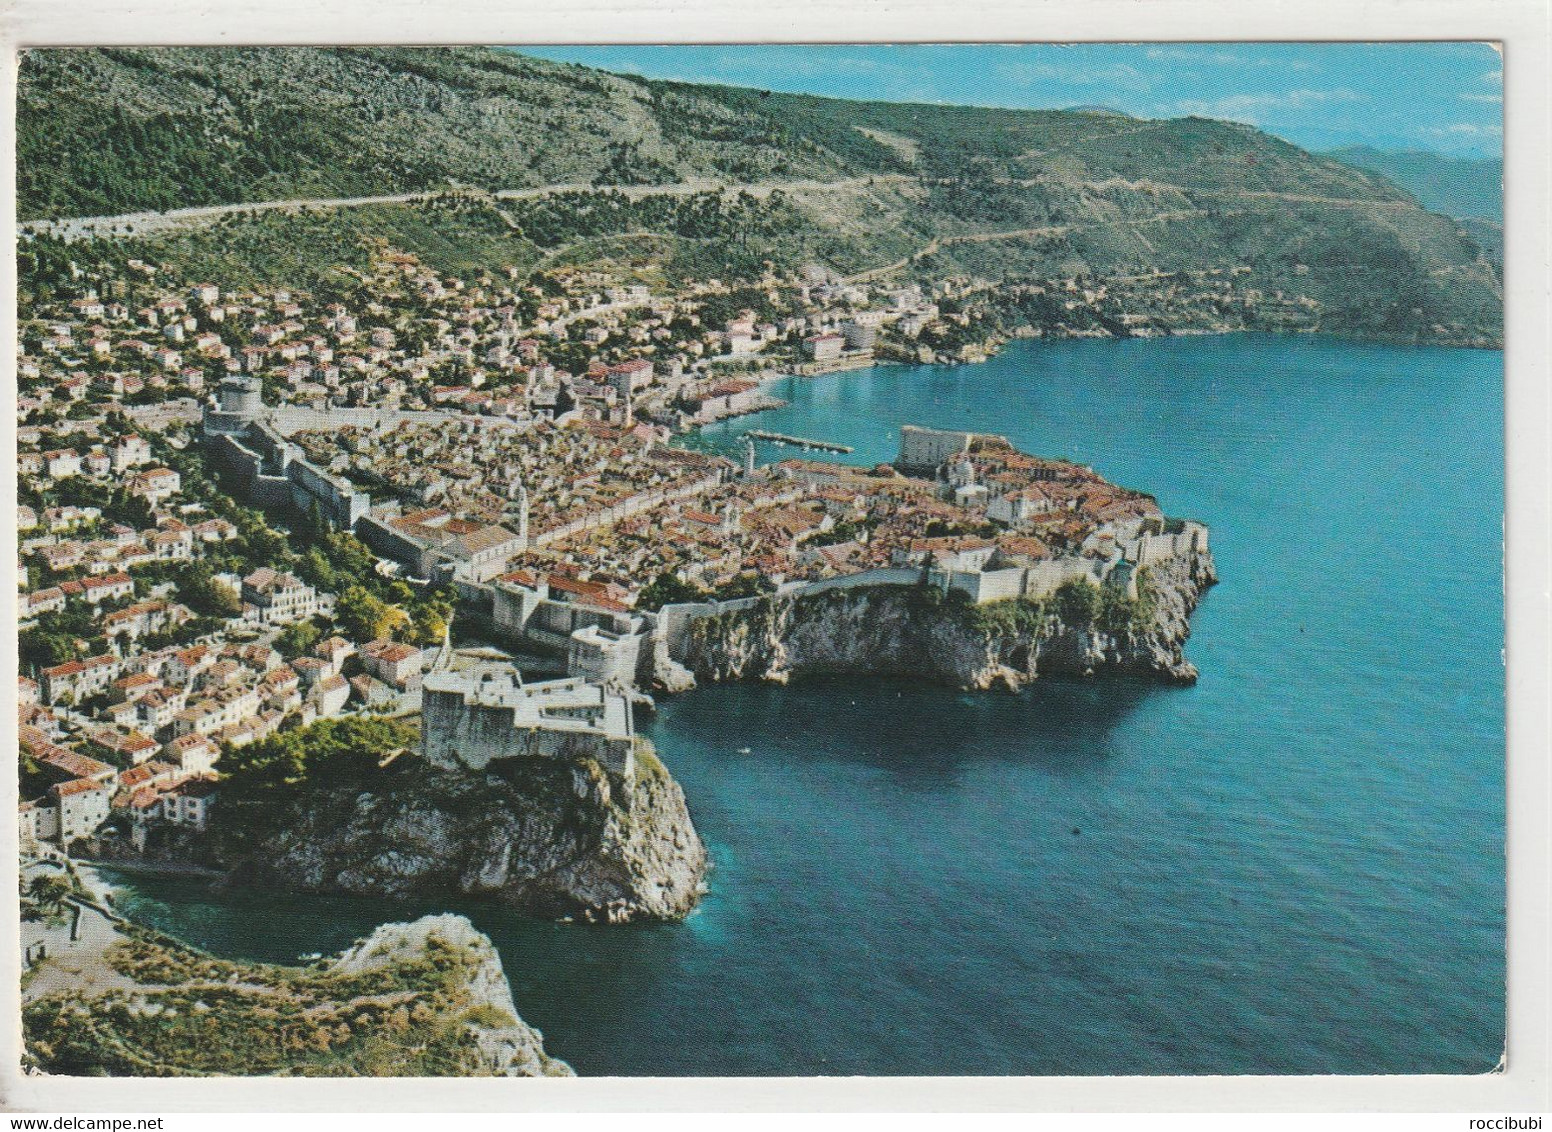 Dubrovnik, Kroatien - Croacia